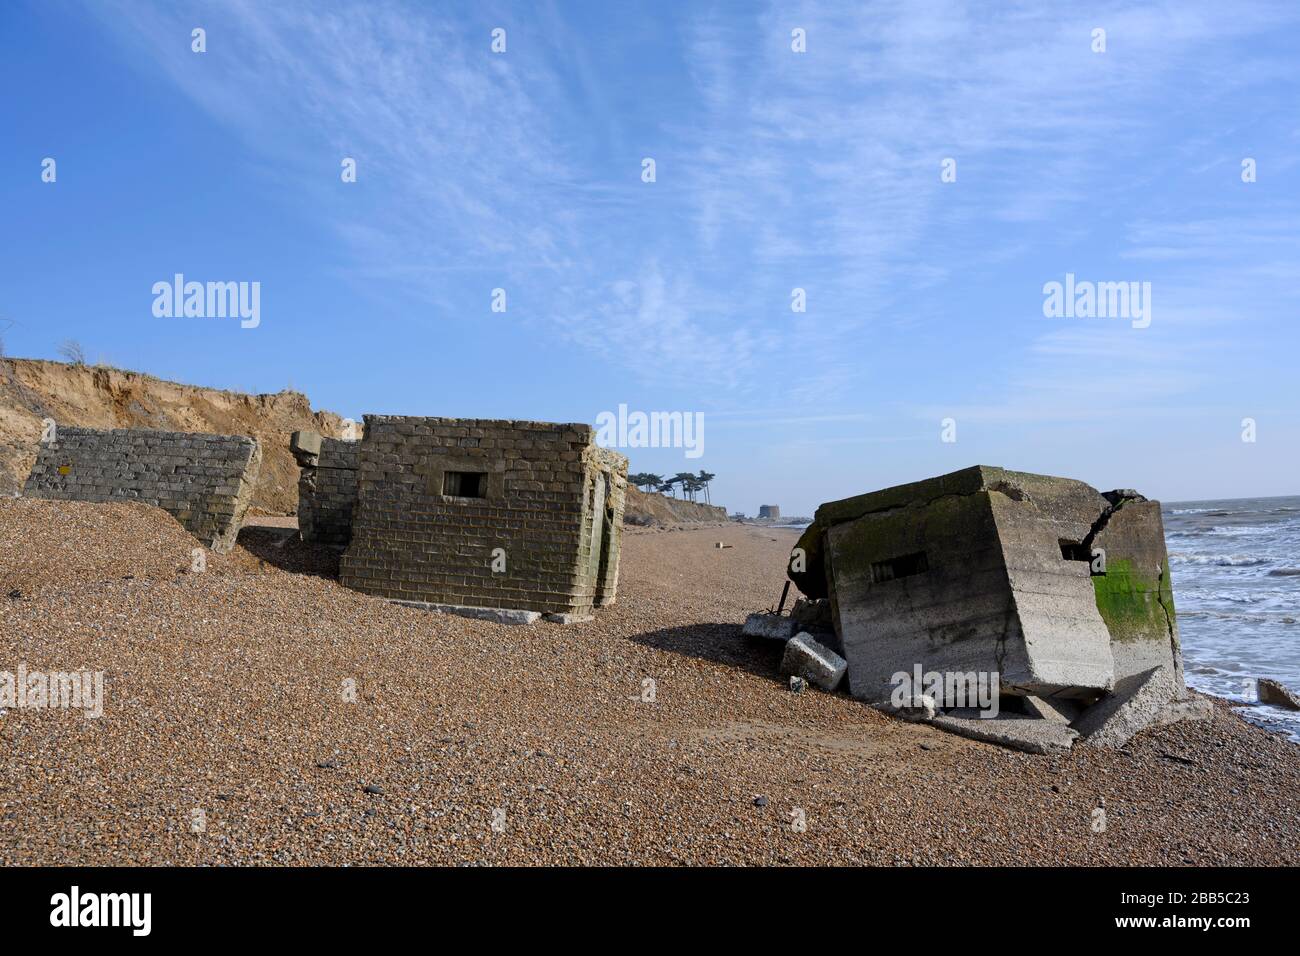 World War Two bunker on a beach due to coastal erosion, Bawdsey, Suffolk, England. Stock Photo